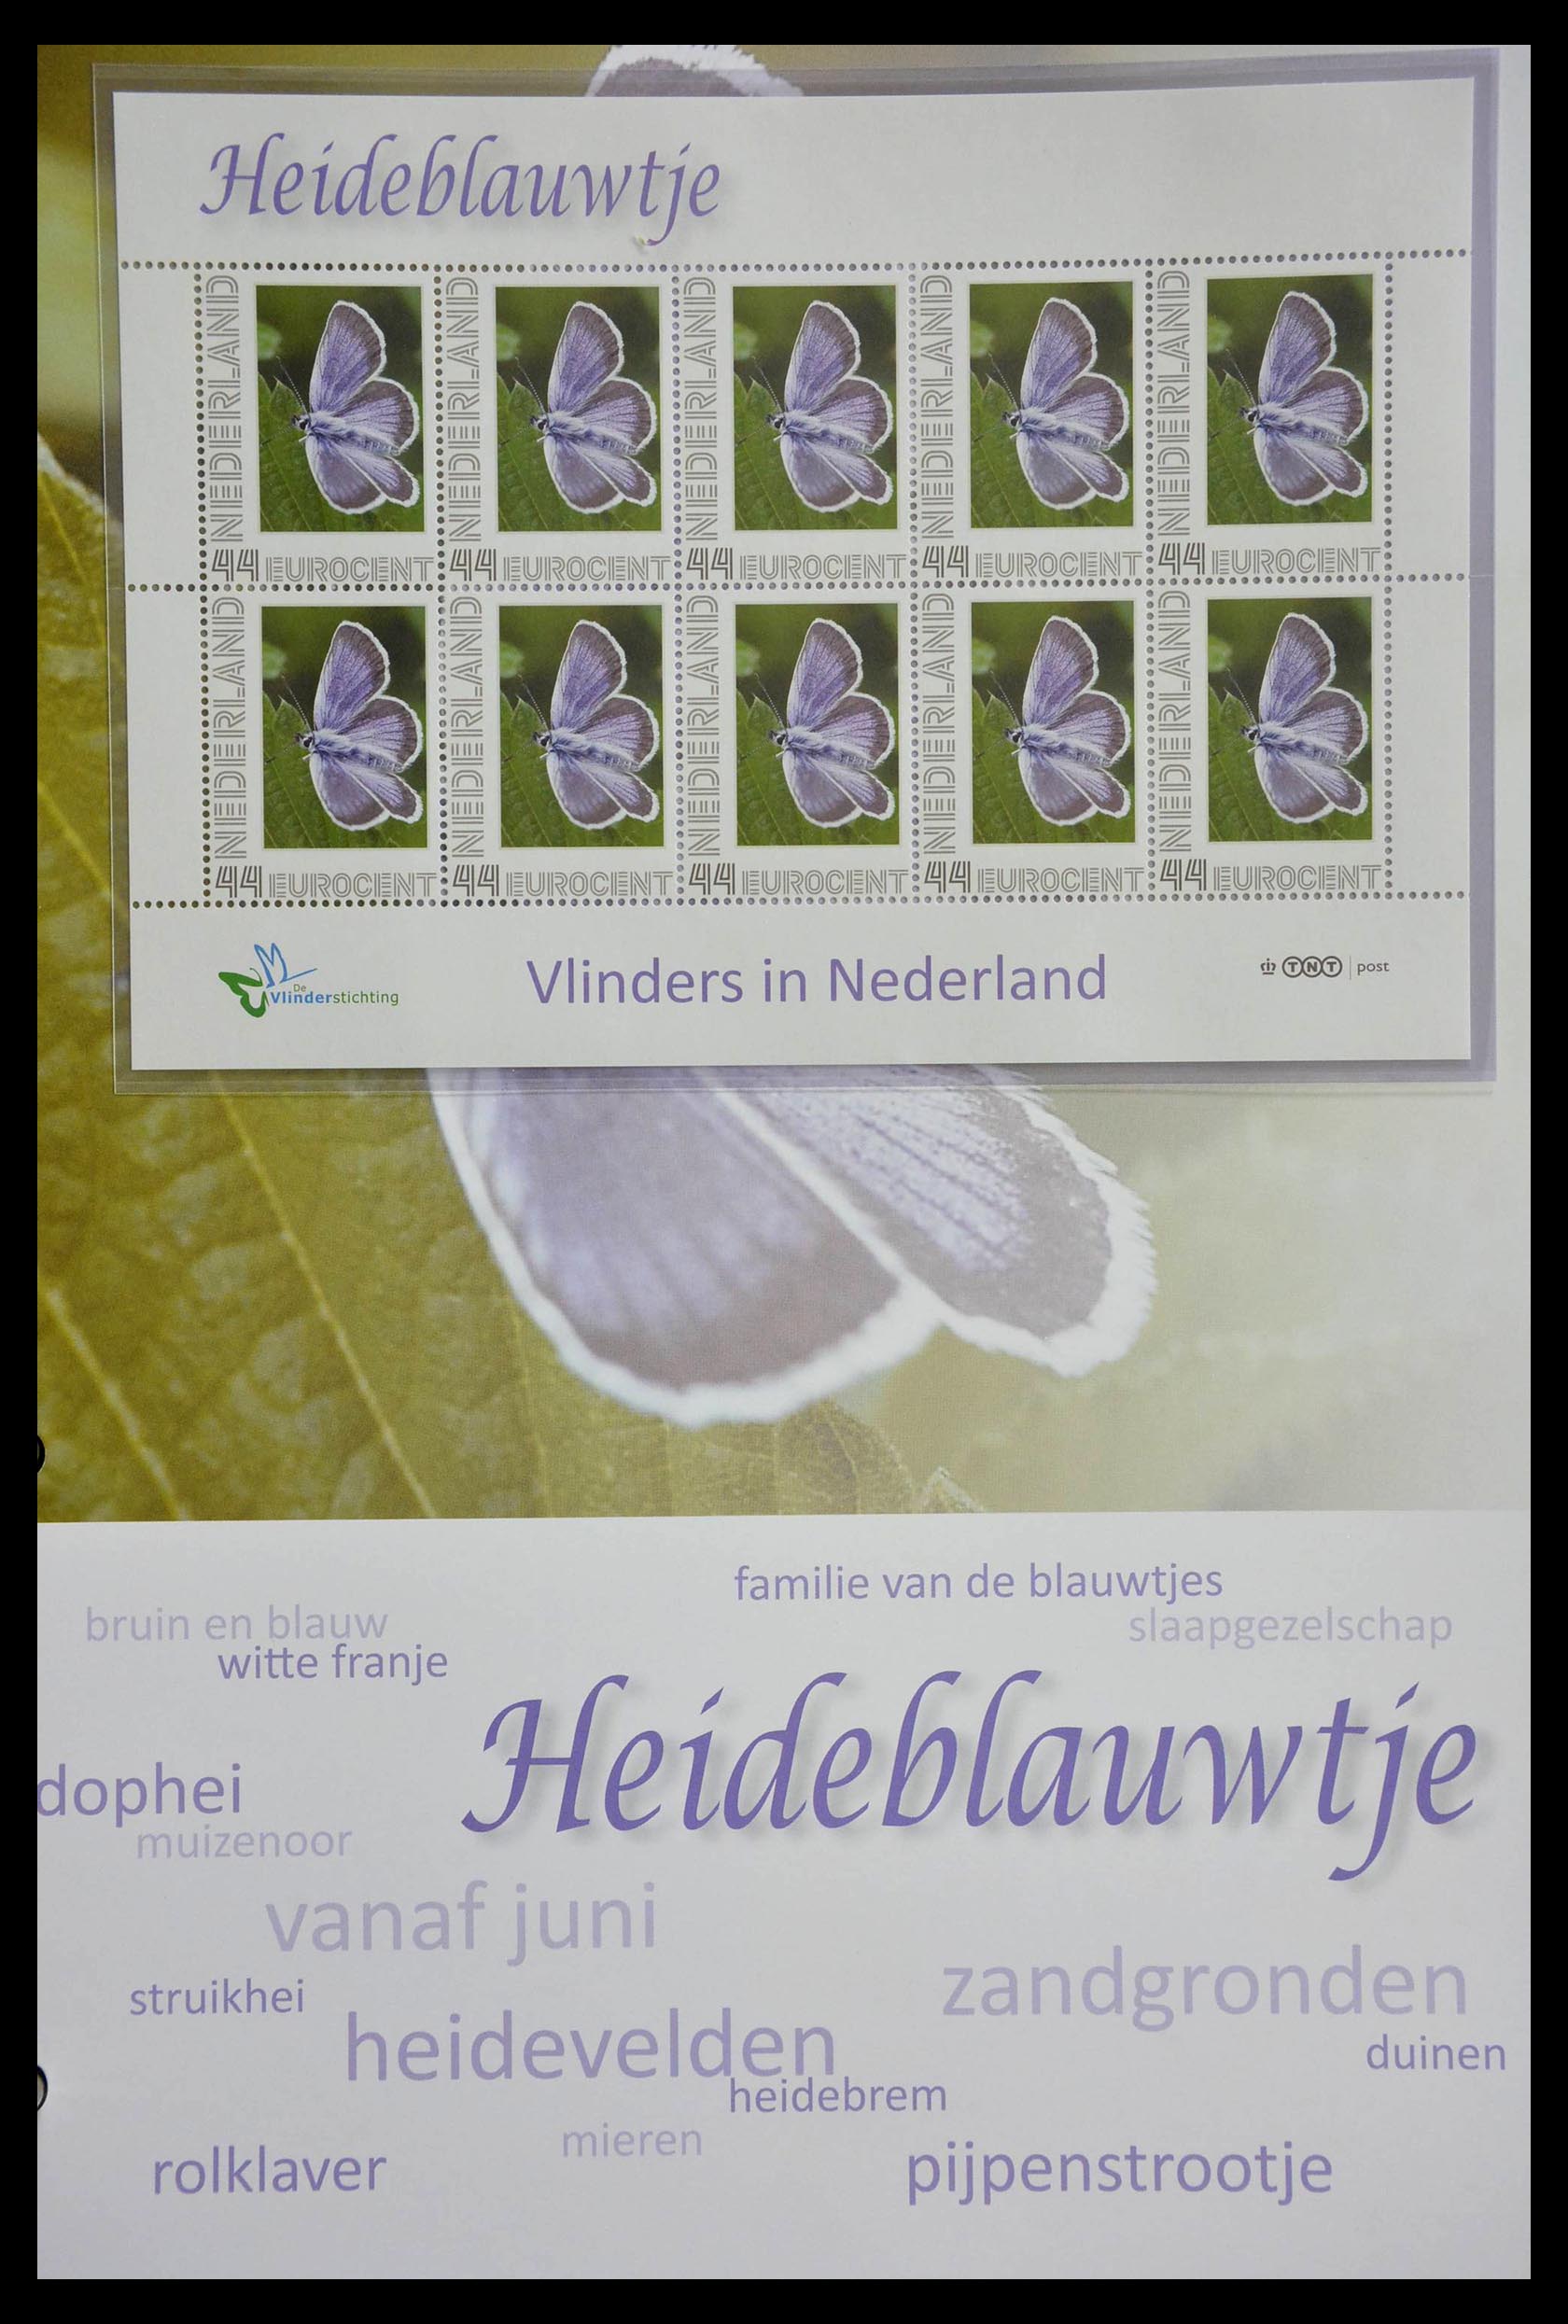 13105 033 - 13105 Butterflies in the Netherlands.